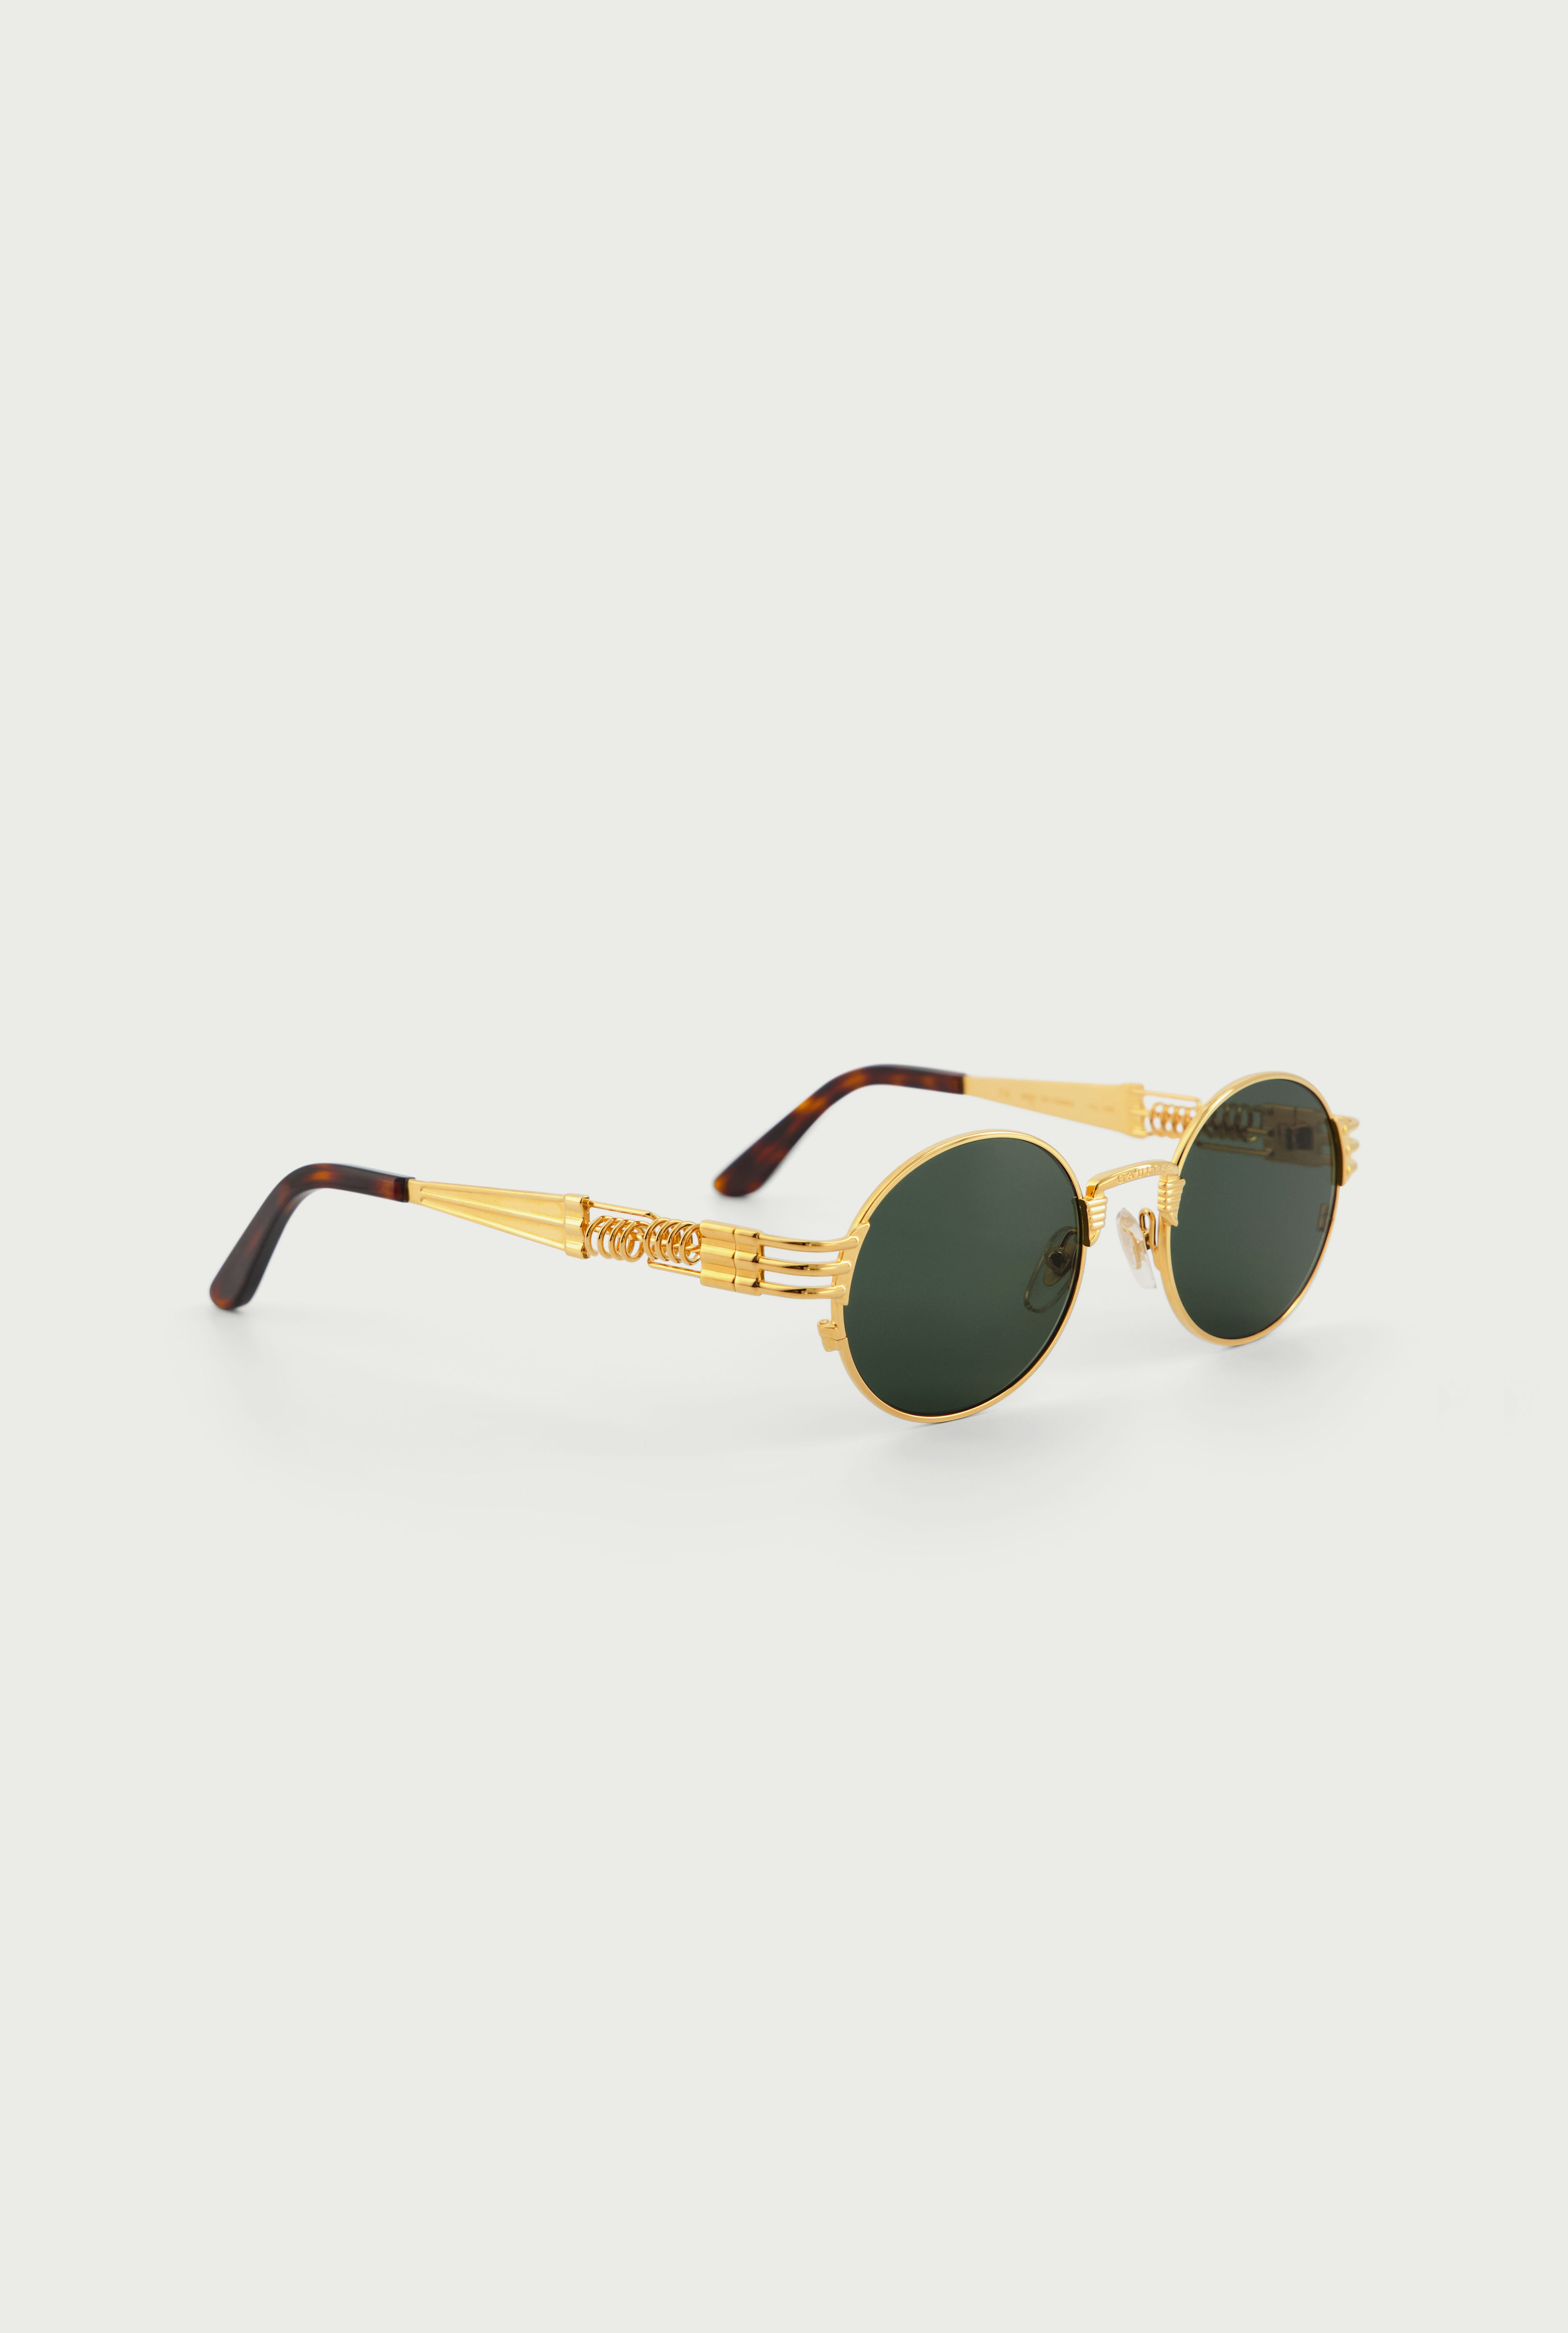 56-6106 Sunglasses Jean Paul Gaultier by Karim Benzema 